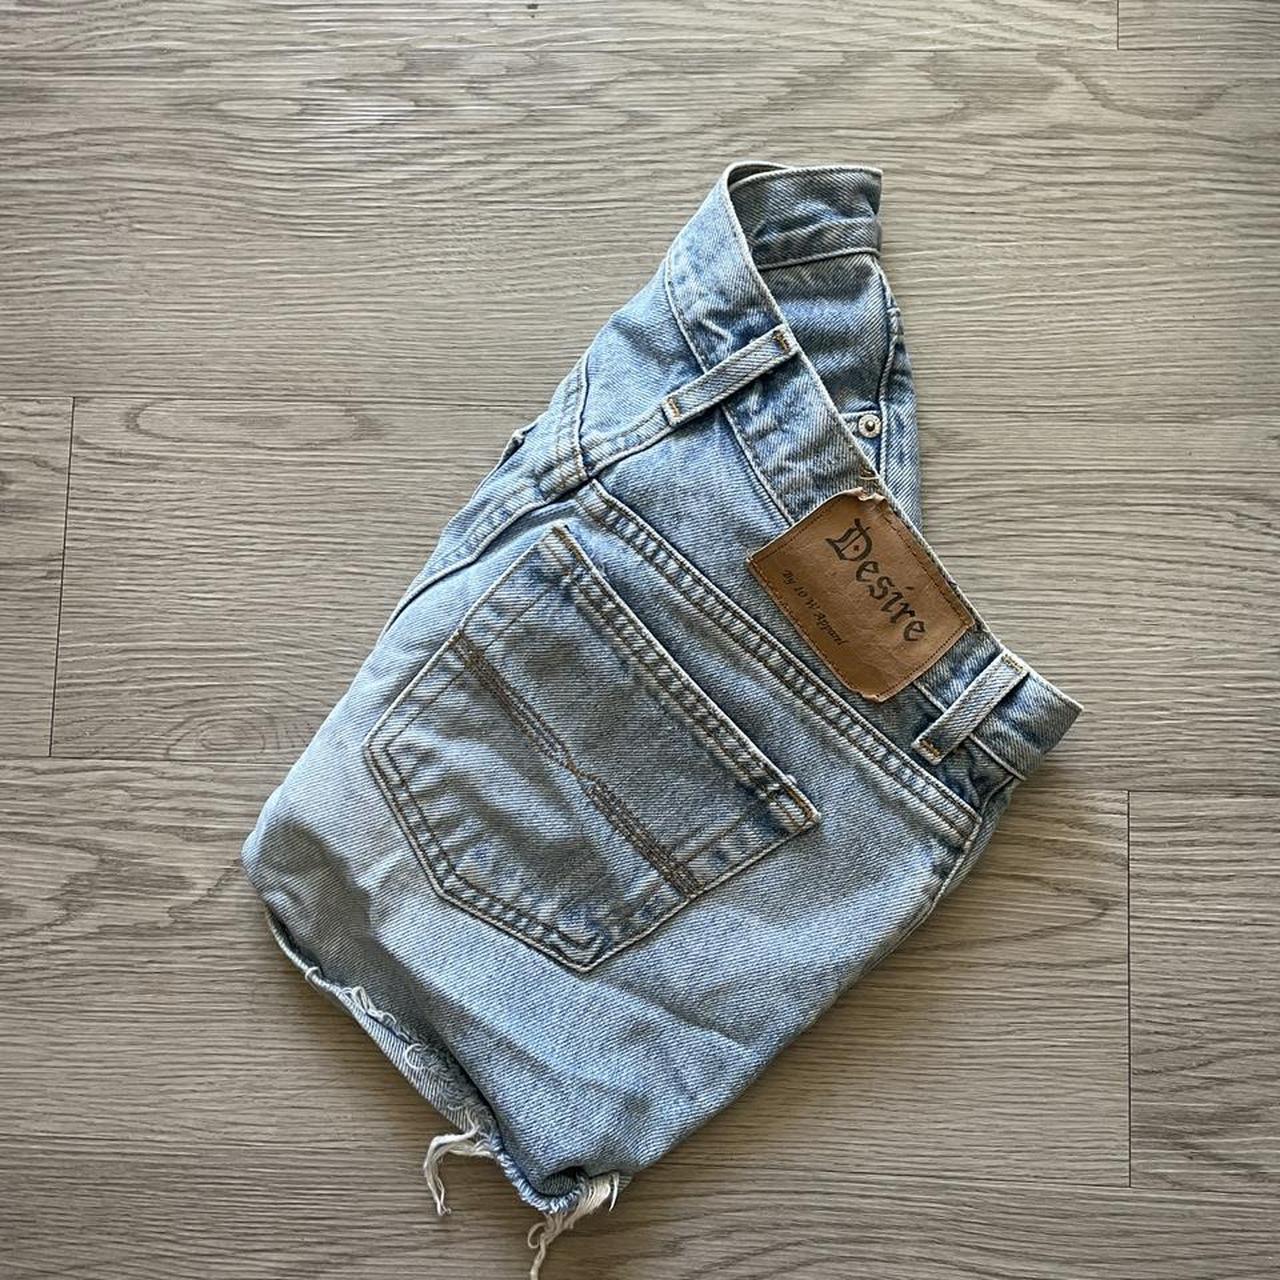 Product Image 3 - light wash jean shorts

size 24

#lightwash